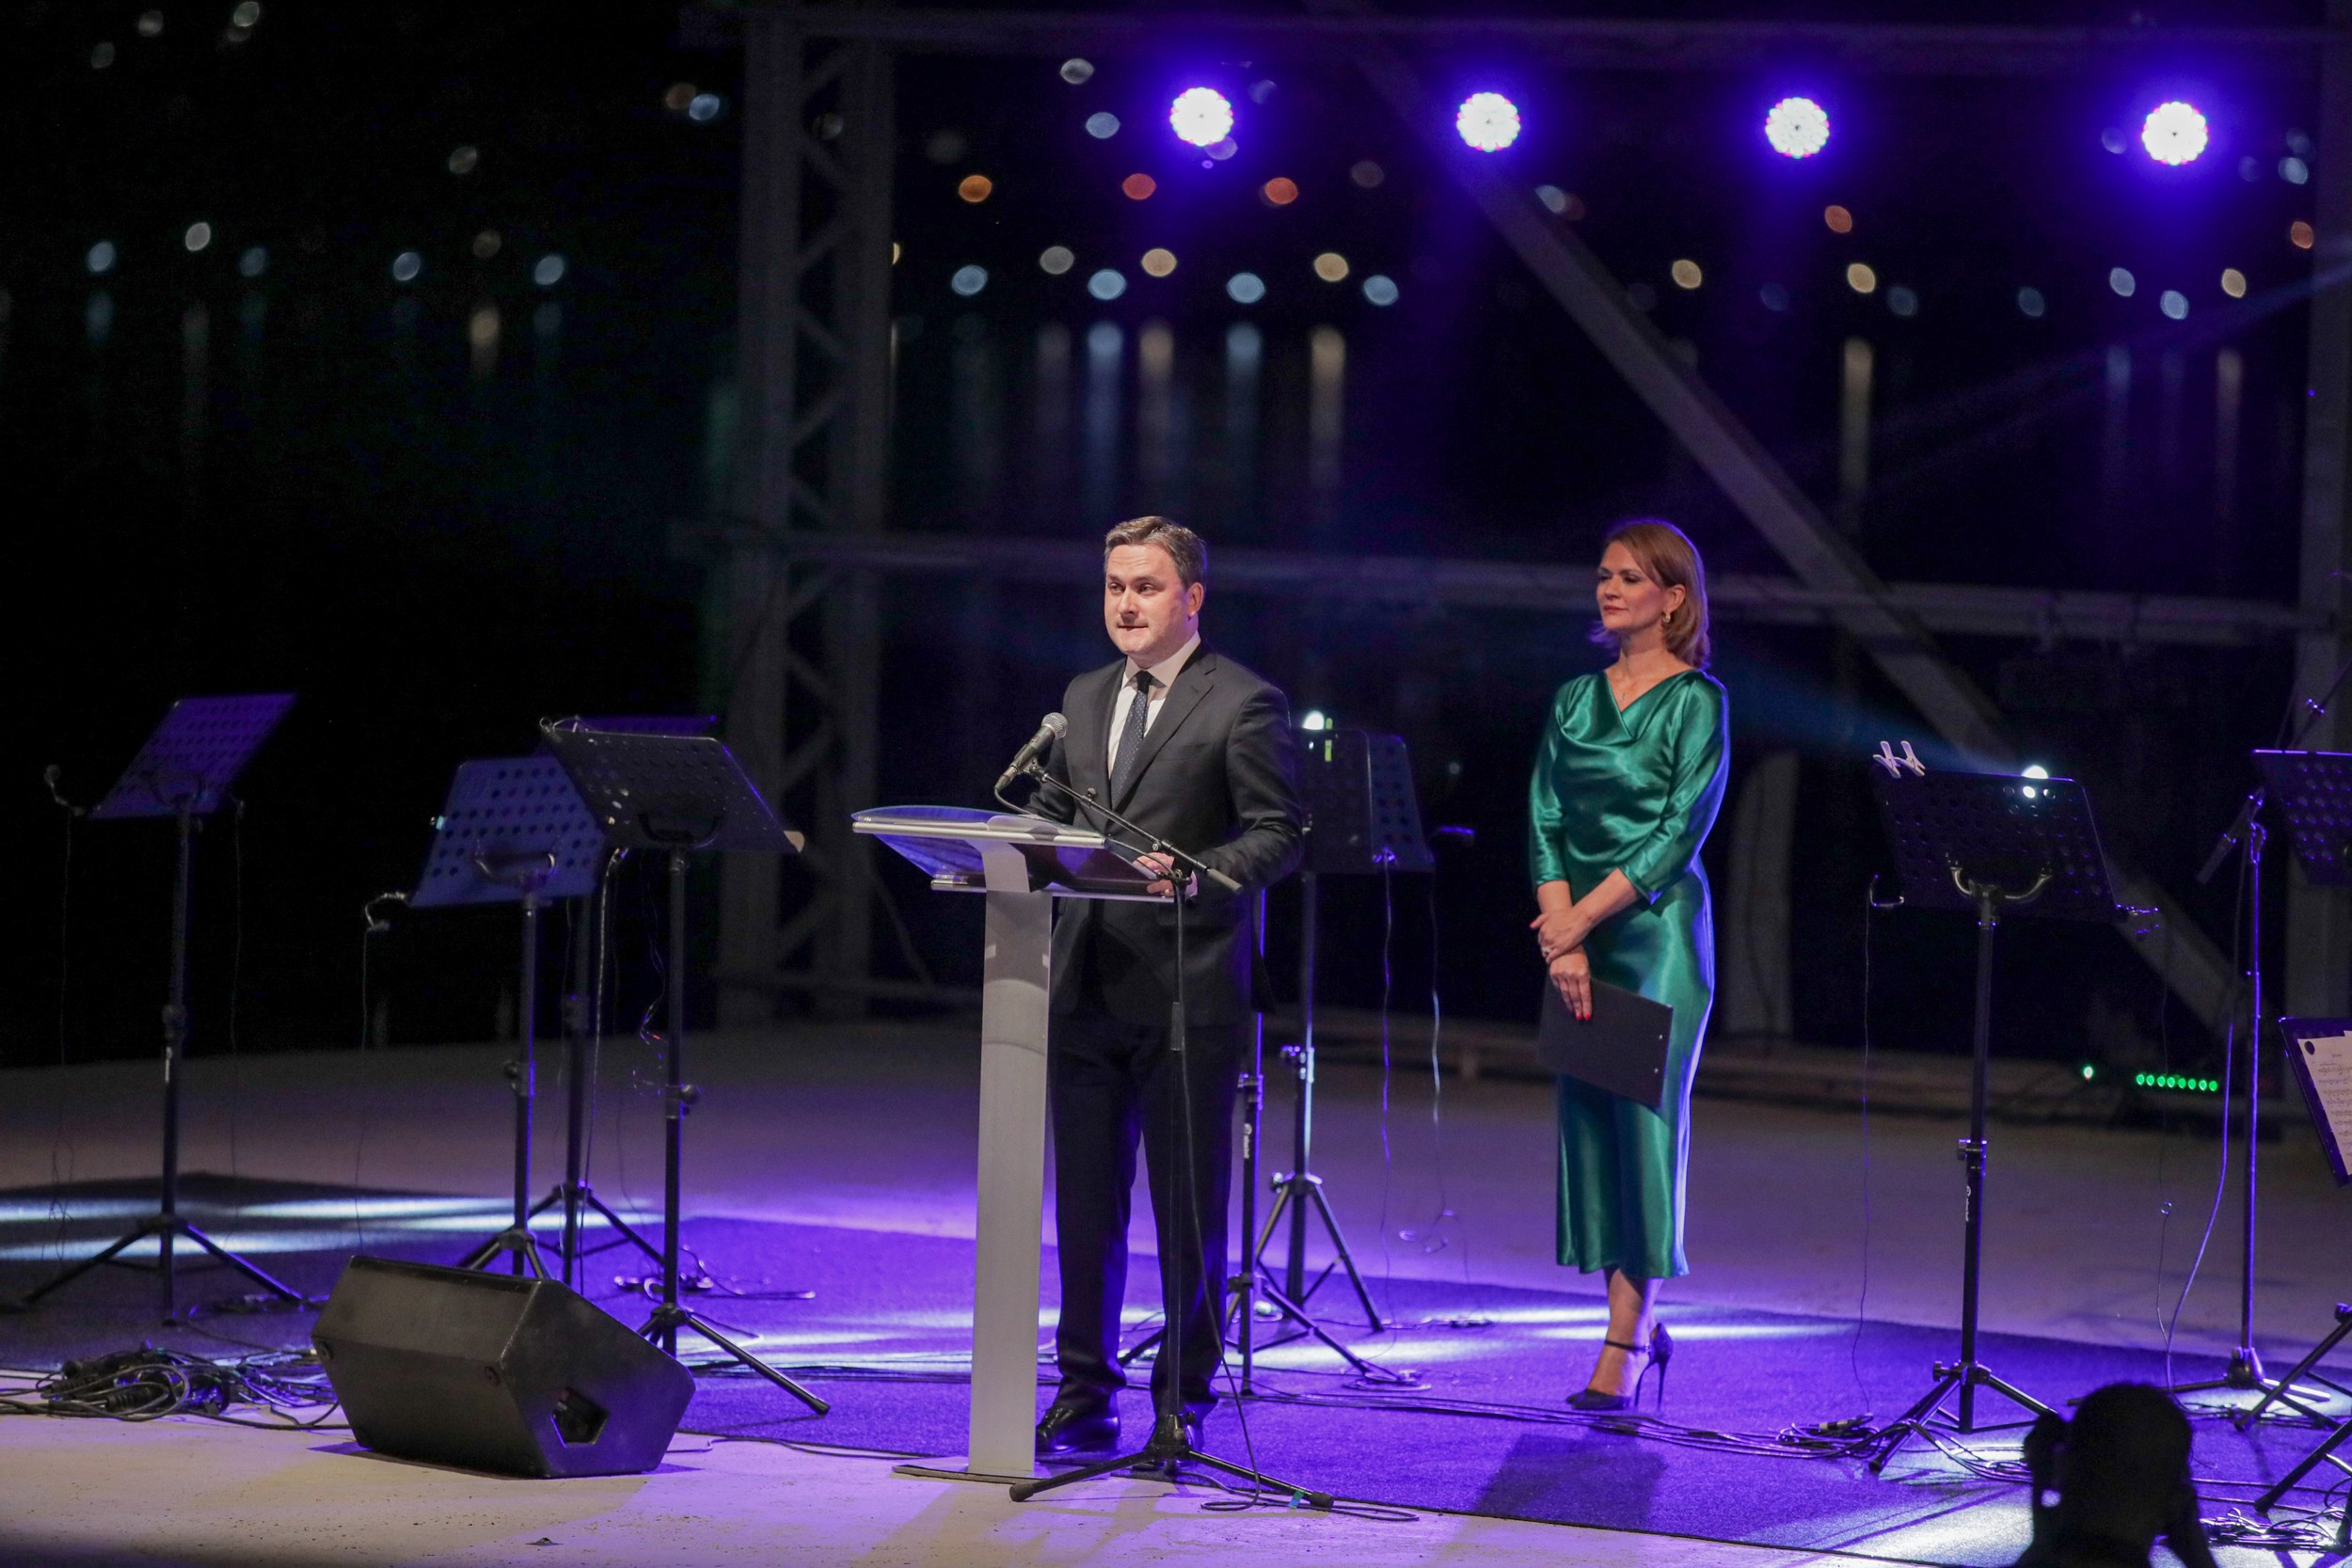 Diplomats pay huge gratitude to the director of the Ohrid Summer Festival, Natasha Popovikj